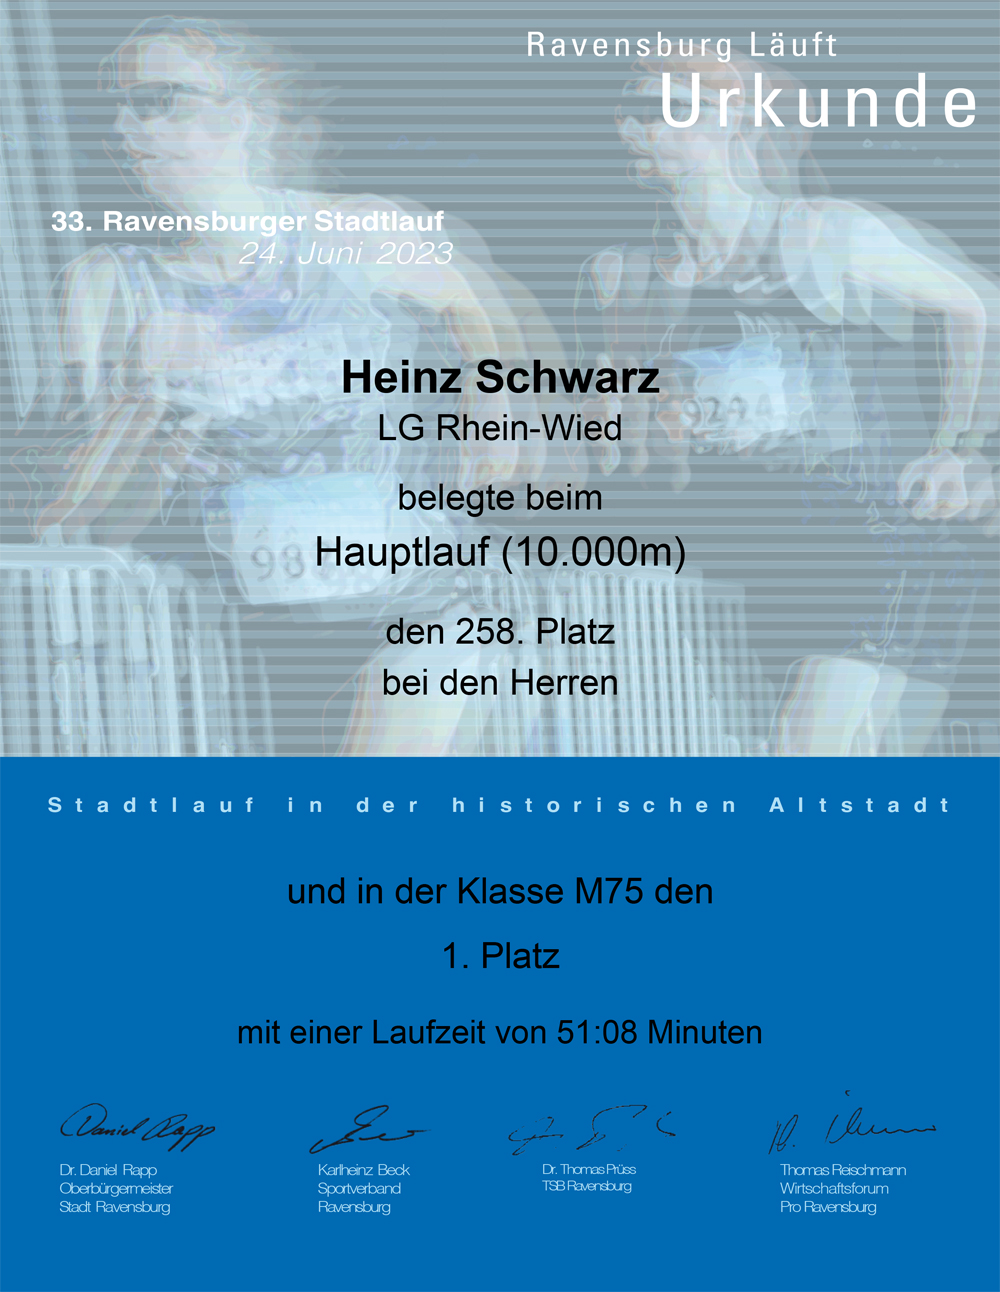 Urkunde Heinz Schwarz Ravensburg 10 km 2023